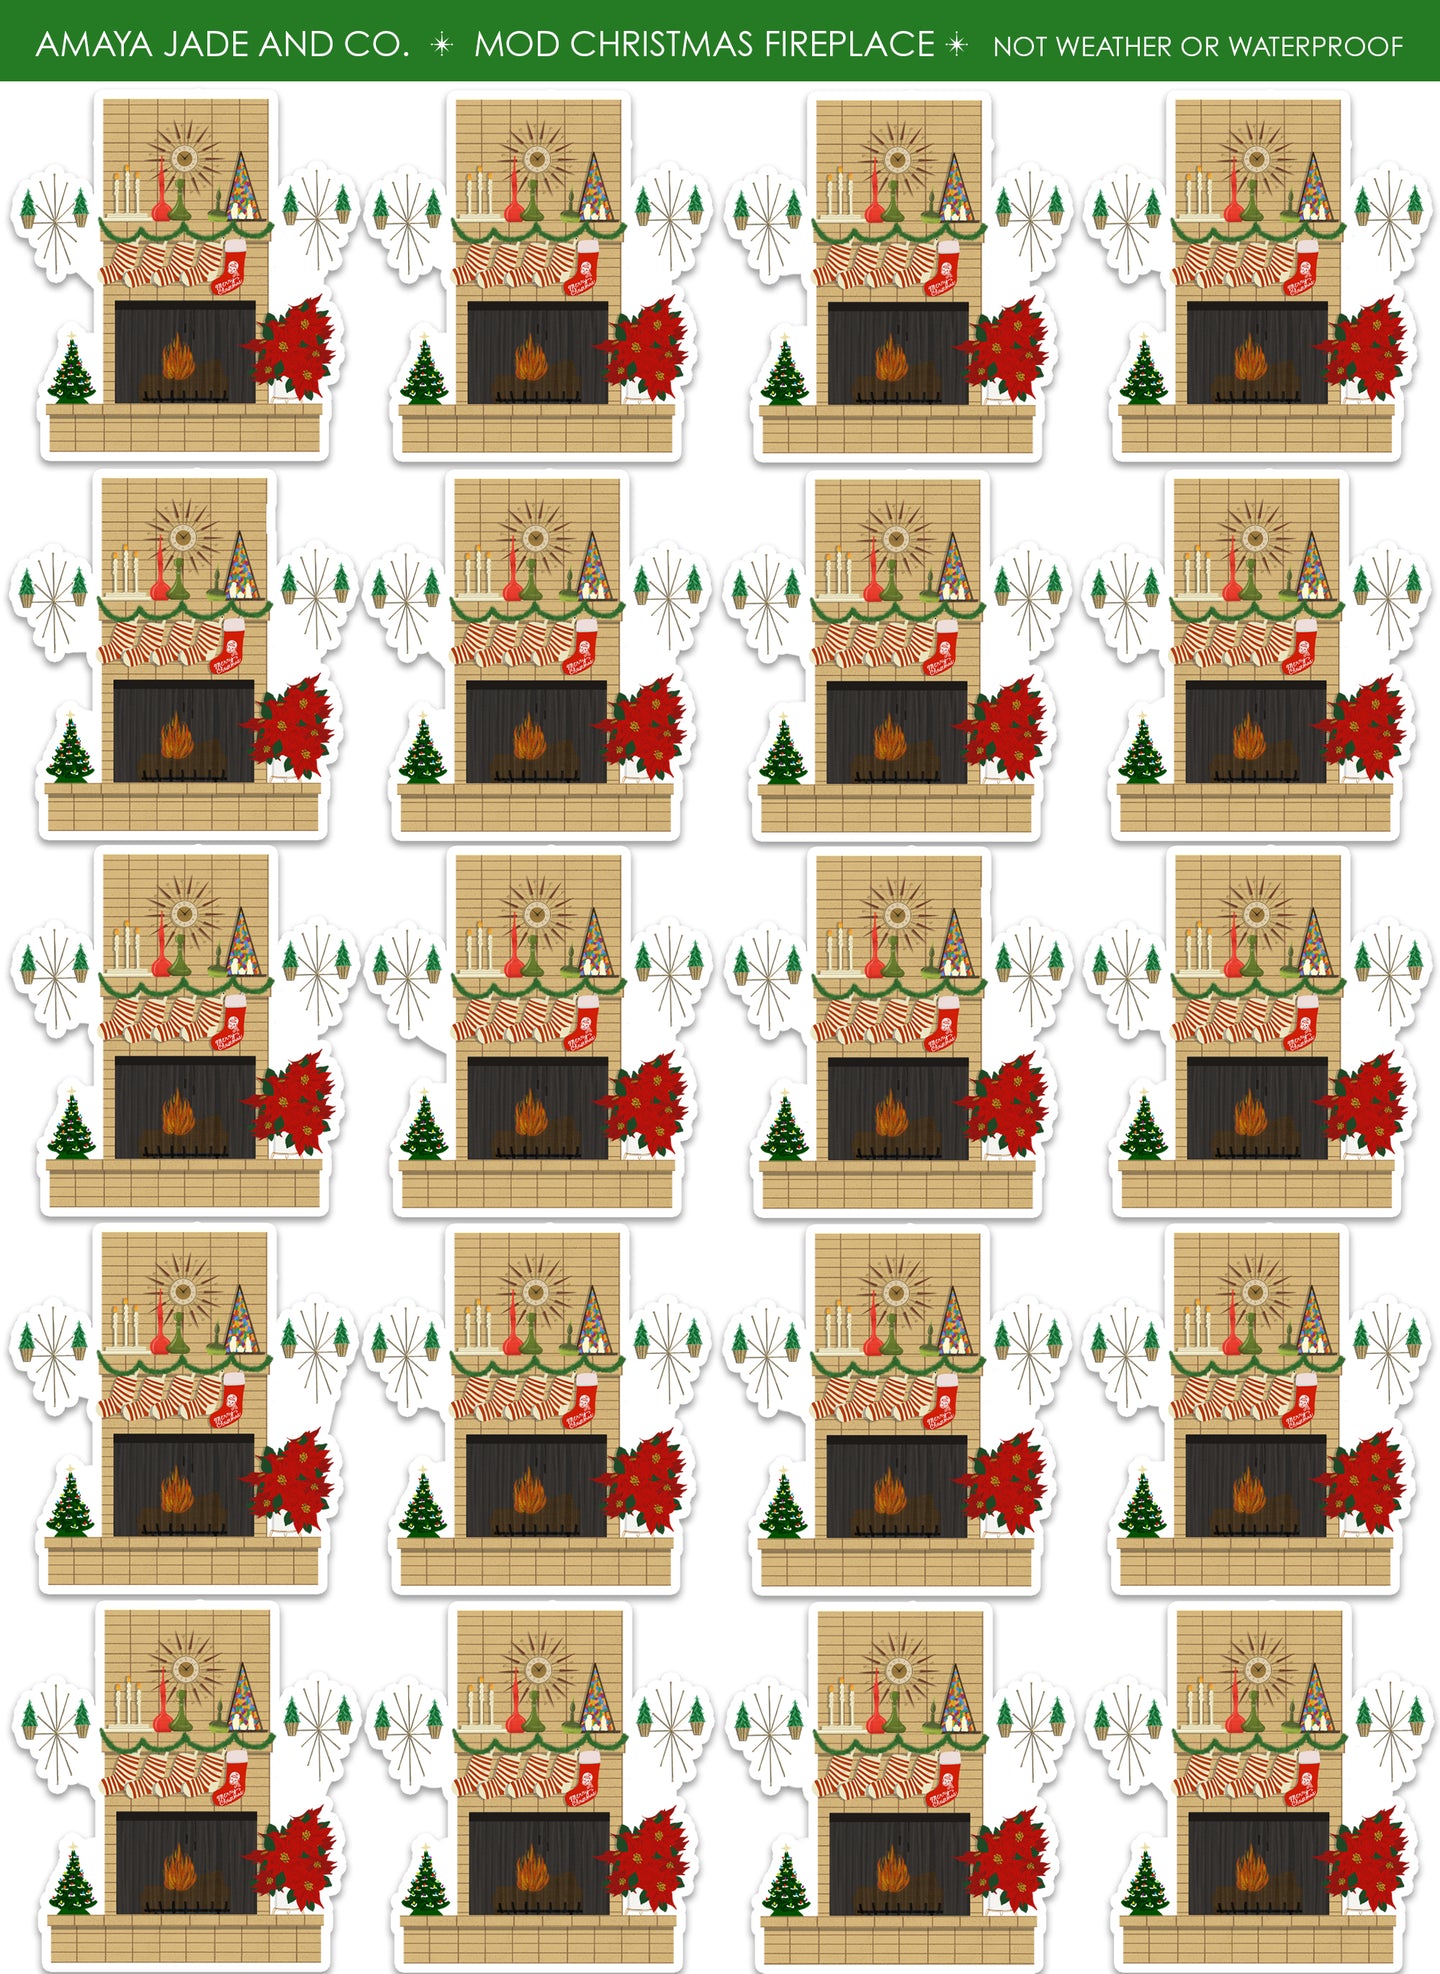 Mod Christmas Fireplace Art Sticker Set